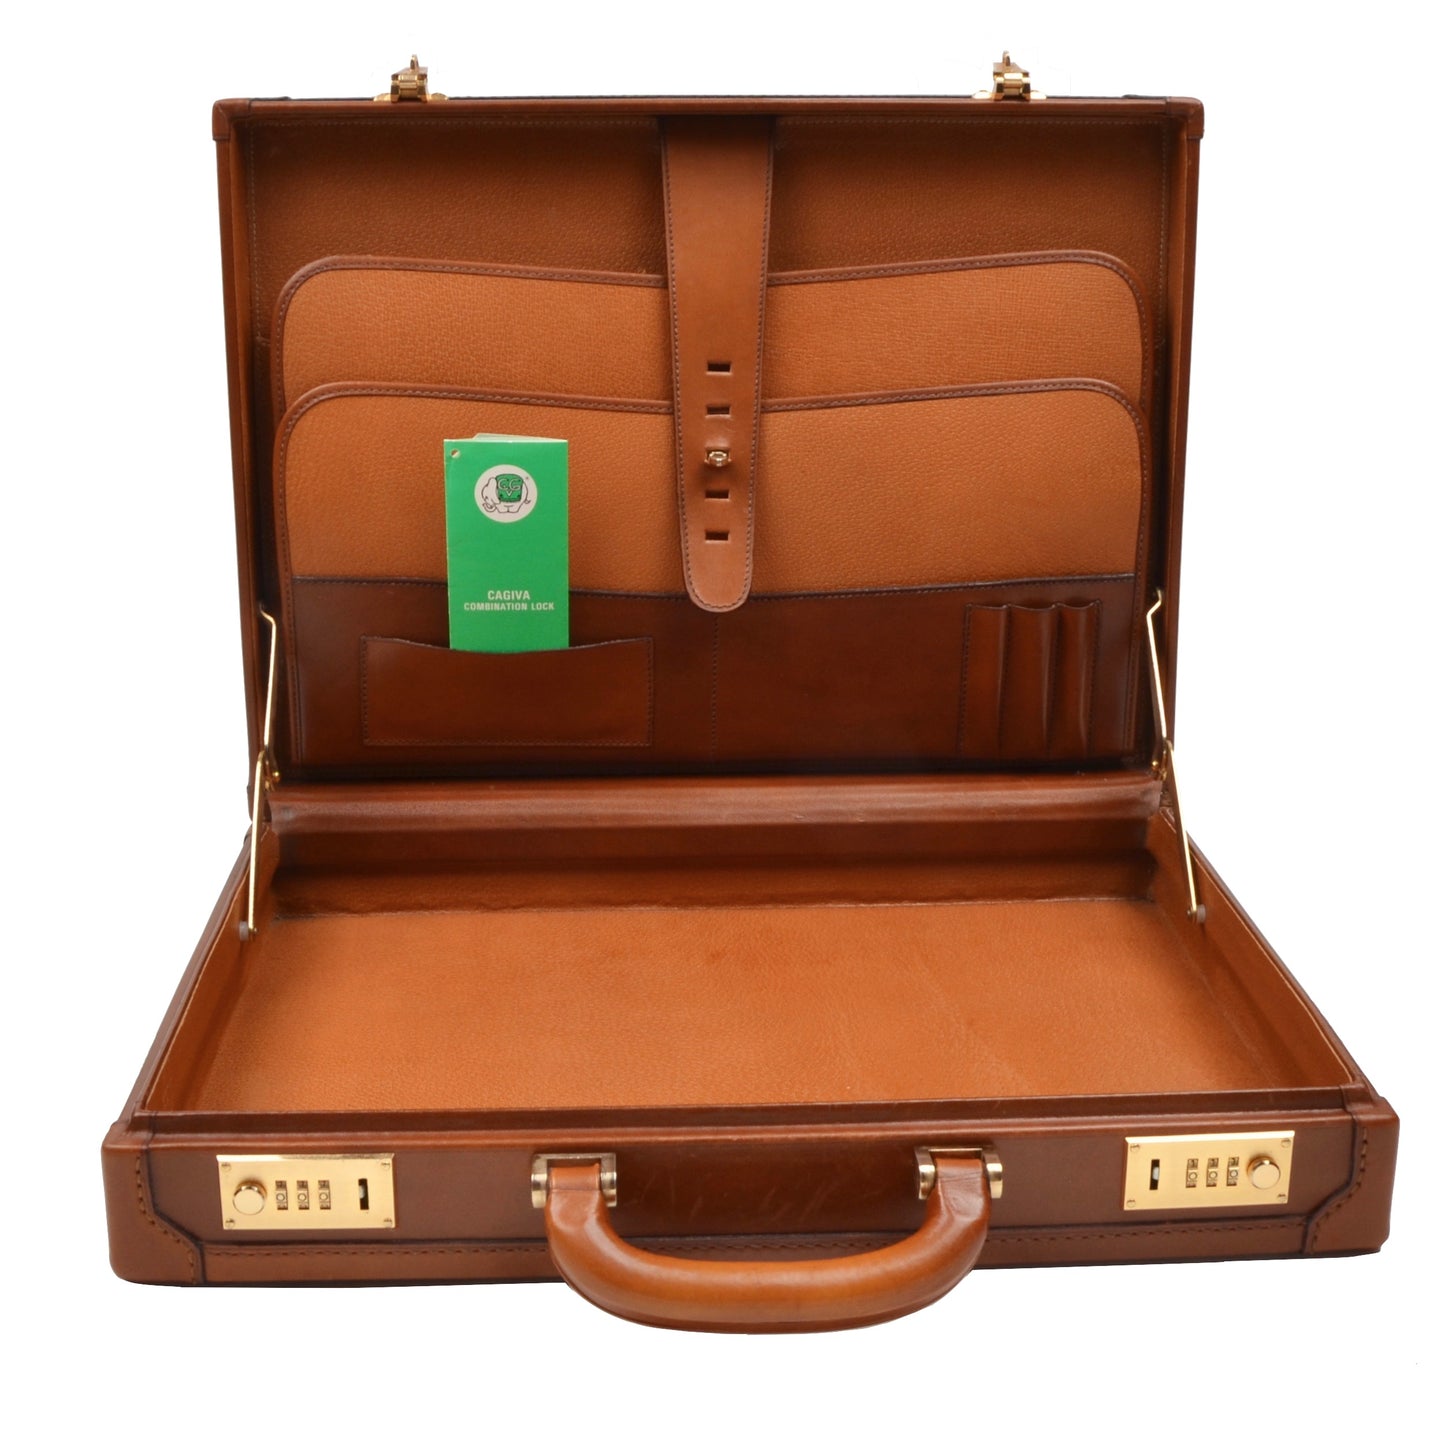 Executive Leather Briefcase - Tan